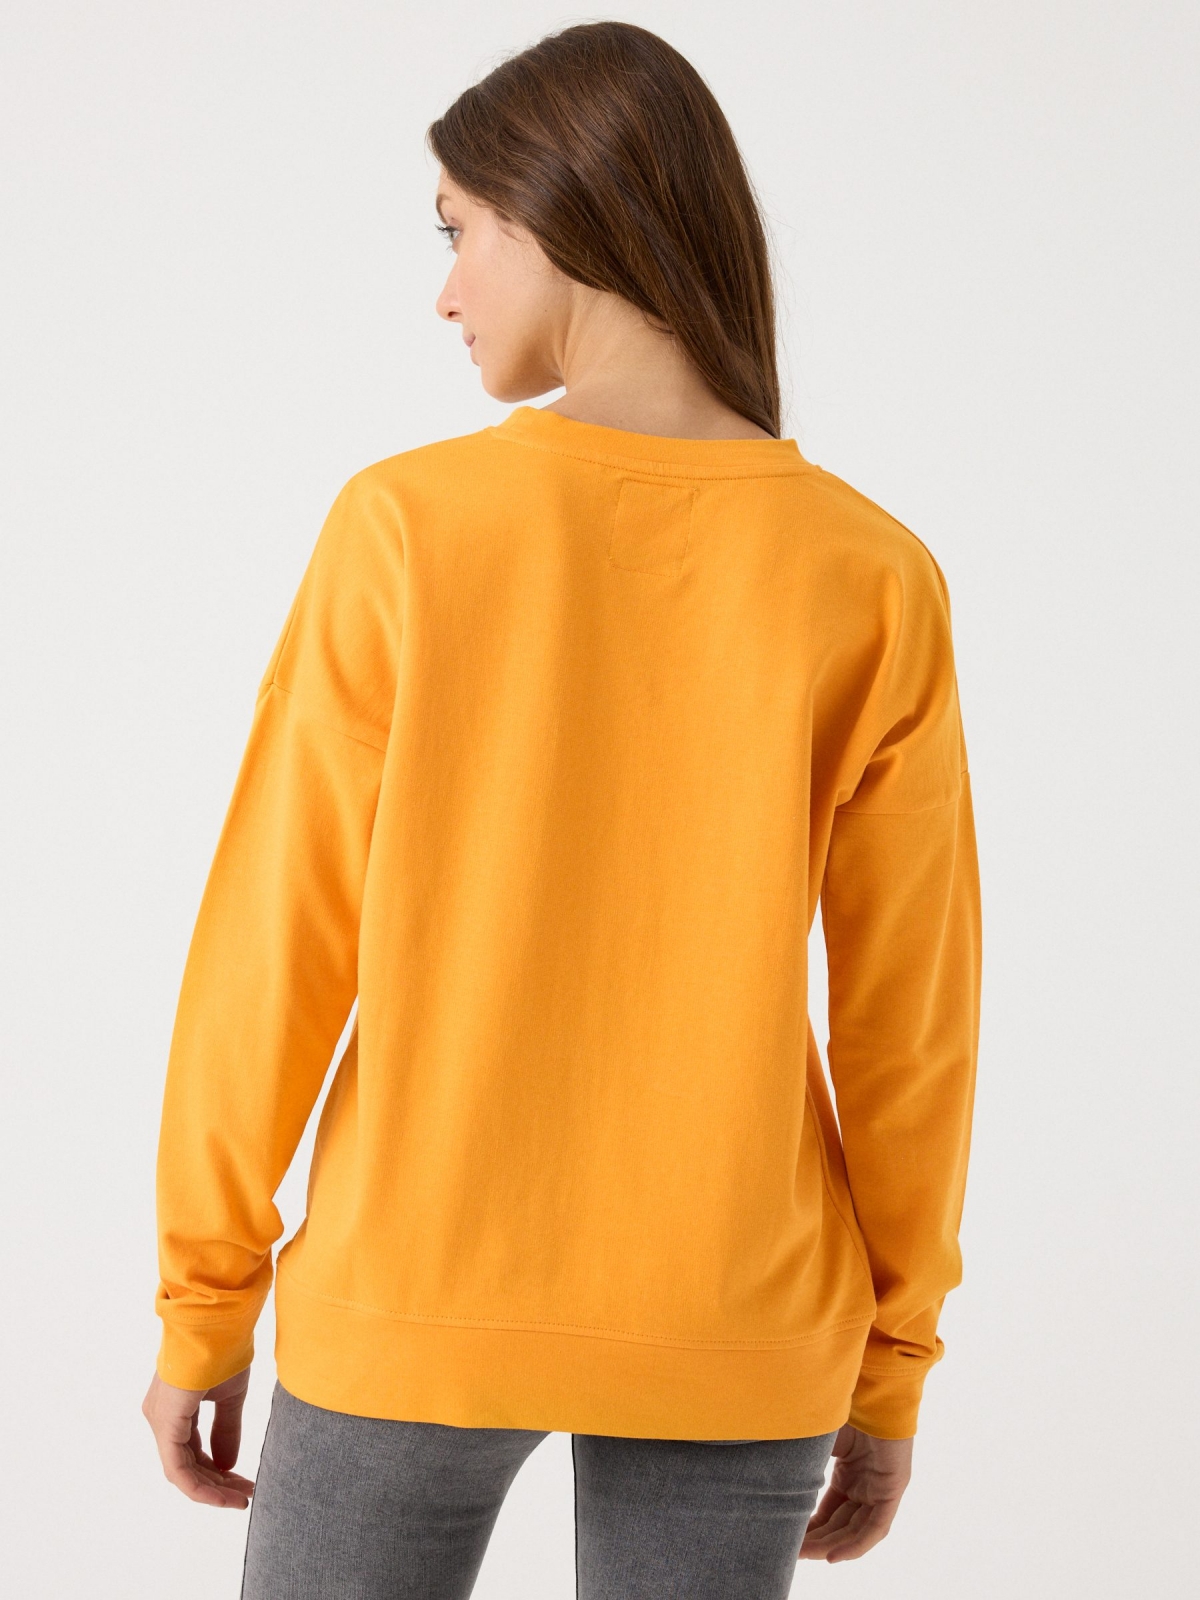 Sweatshirt básica gola redonda amarelo vista meia traseira